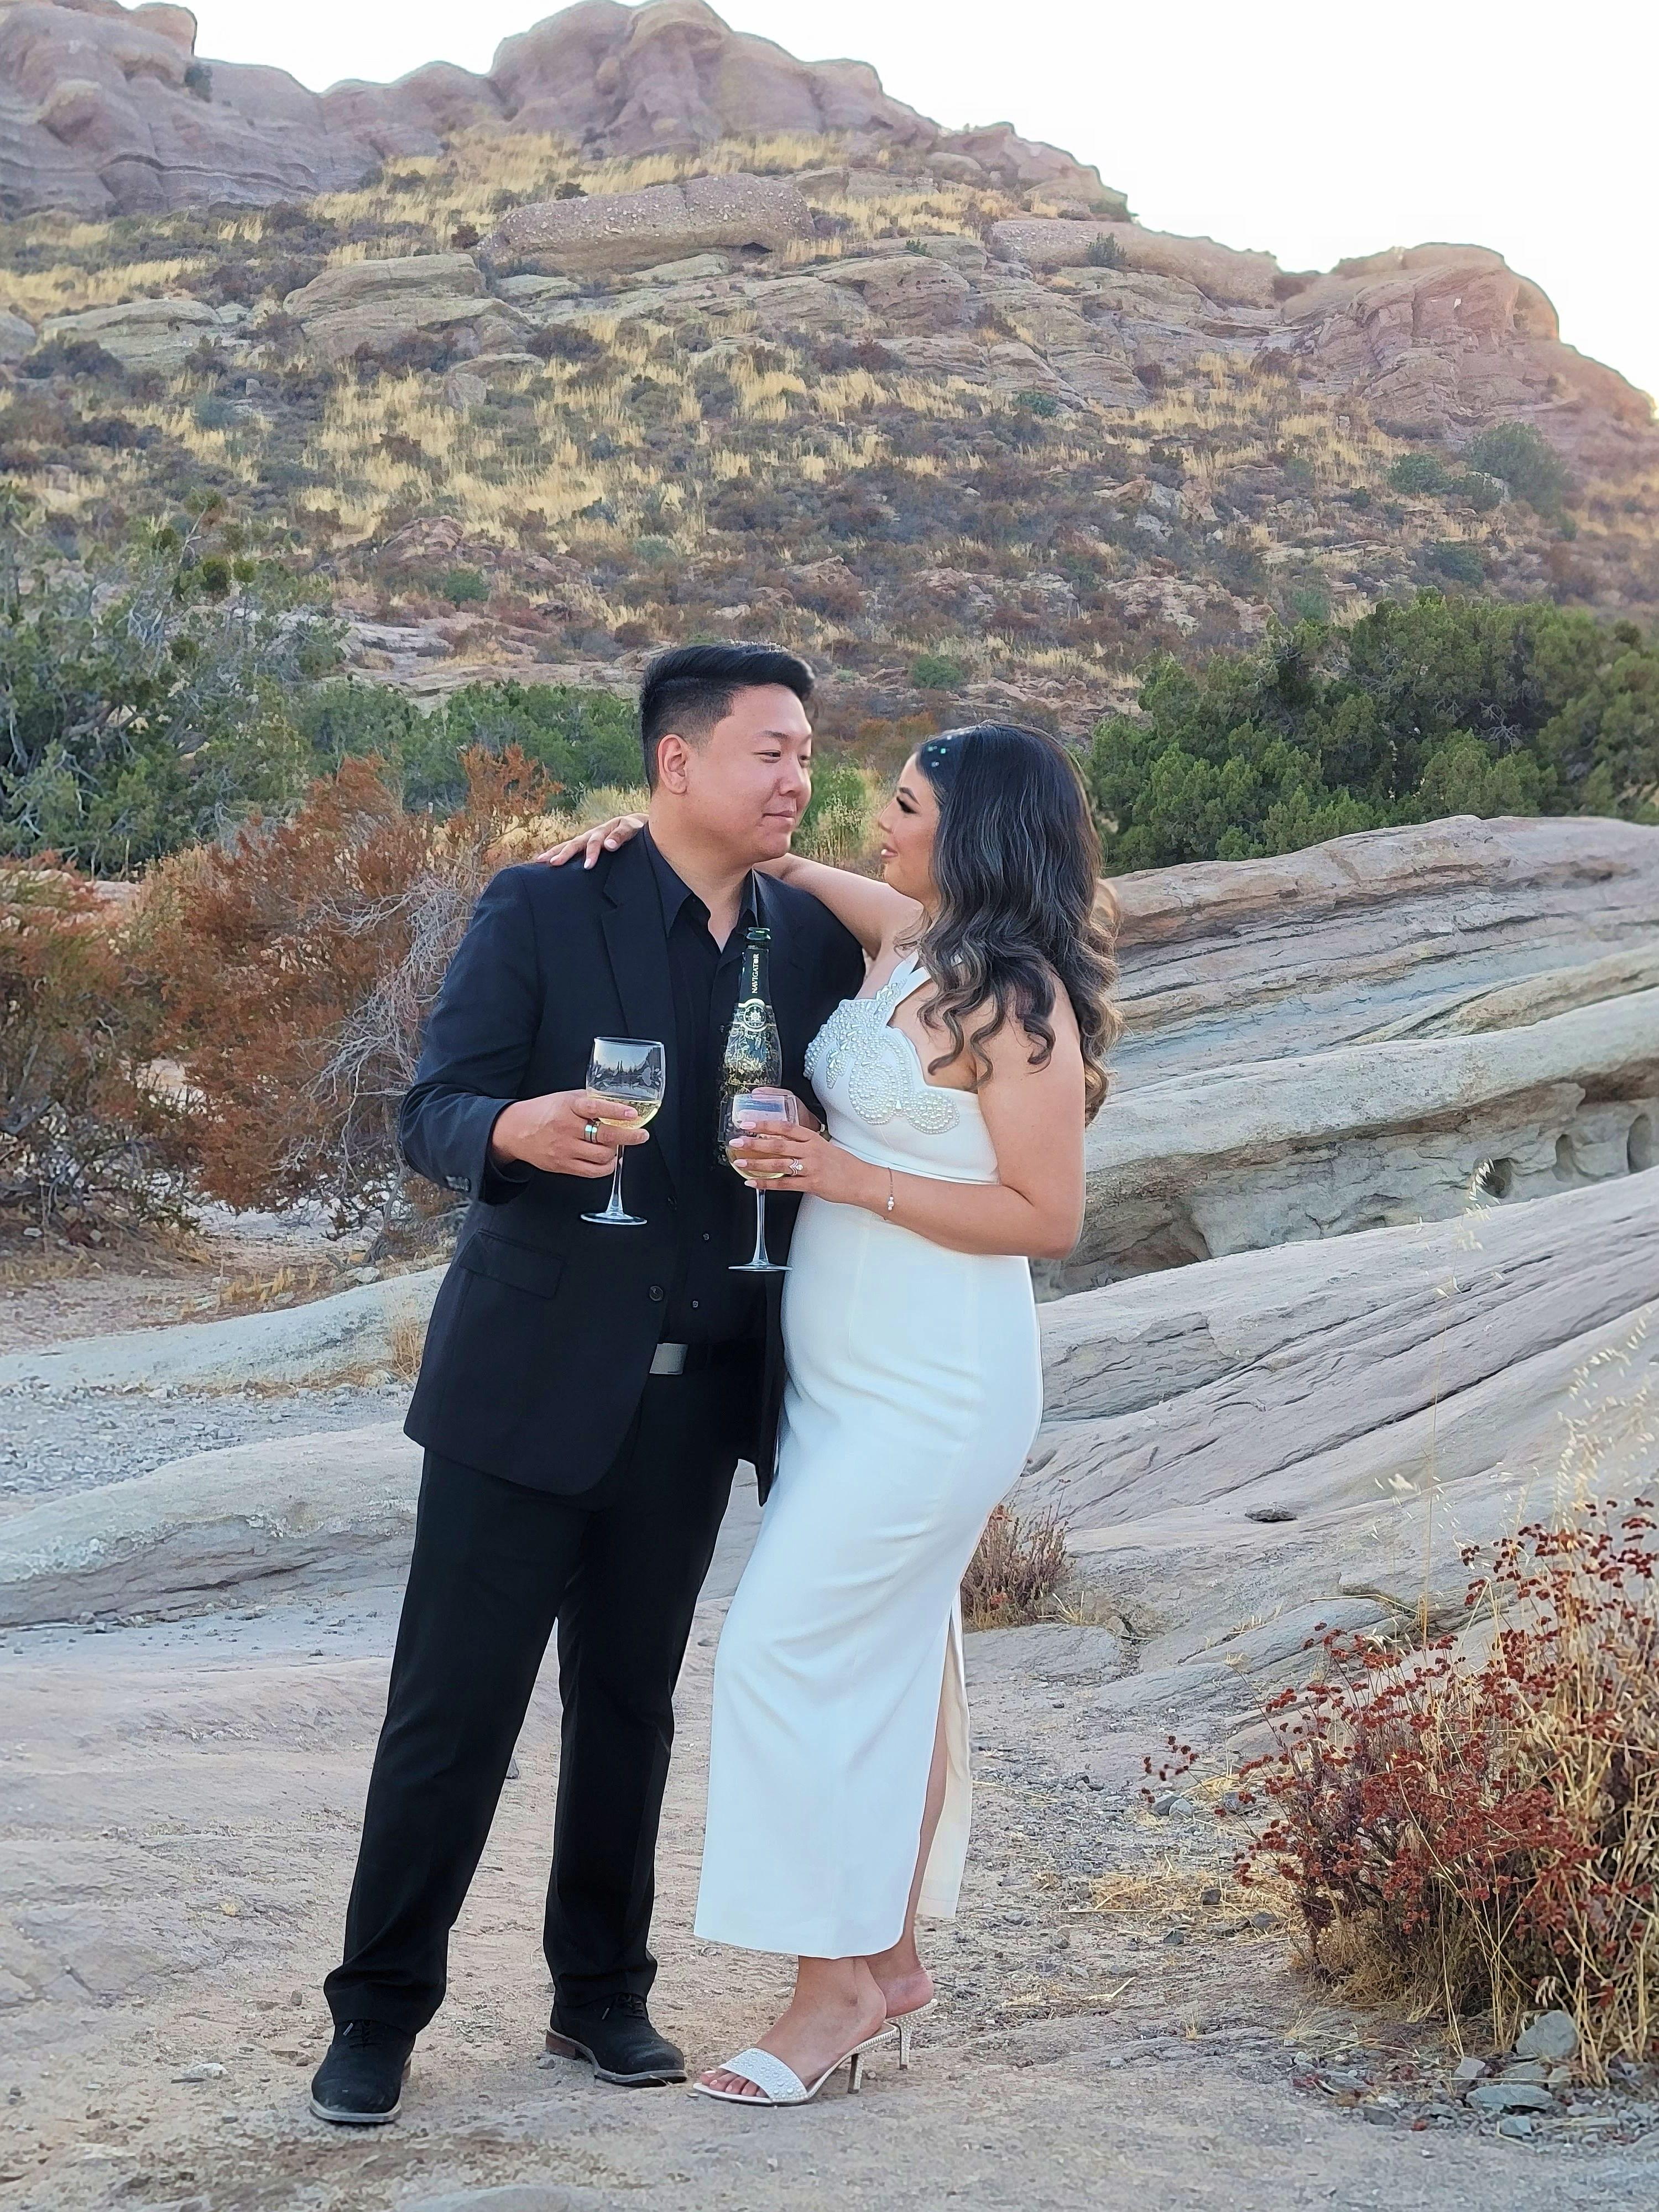 The Wedding Website of Lizbeth Sanchez and Gene Pak